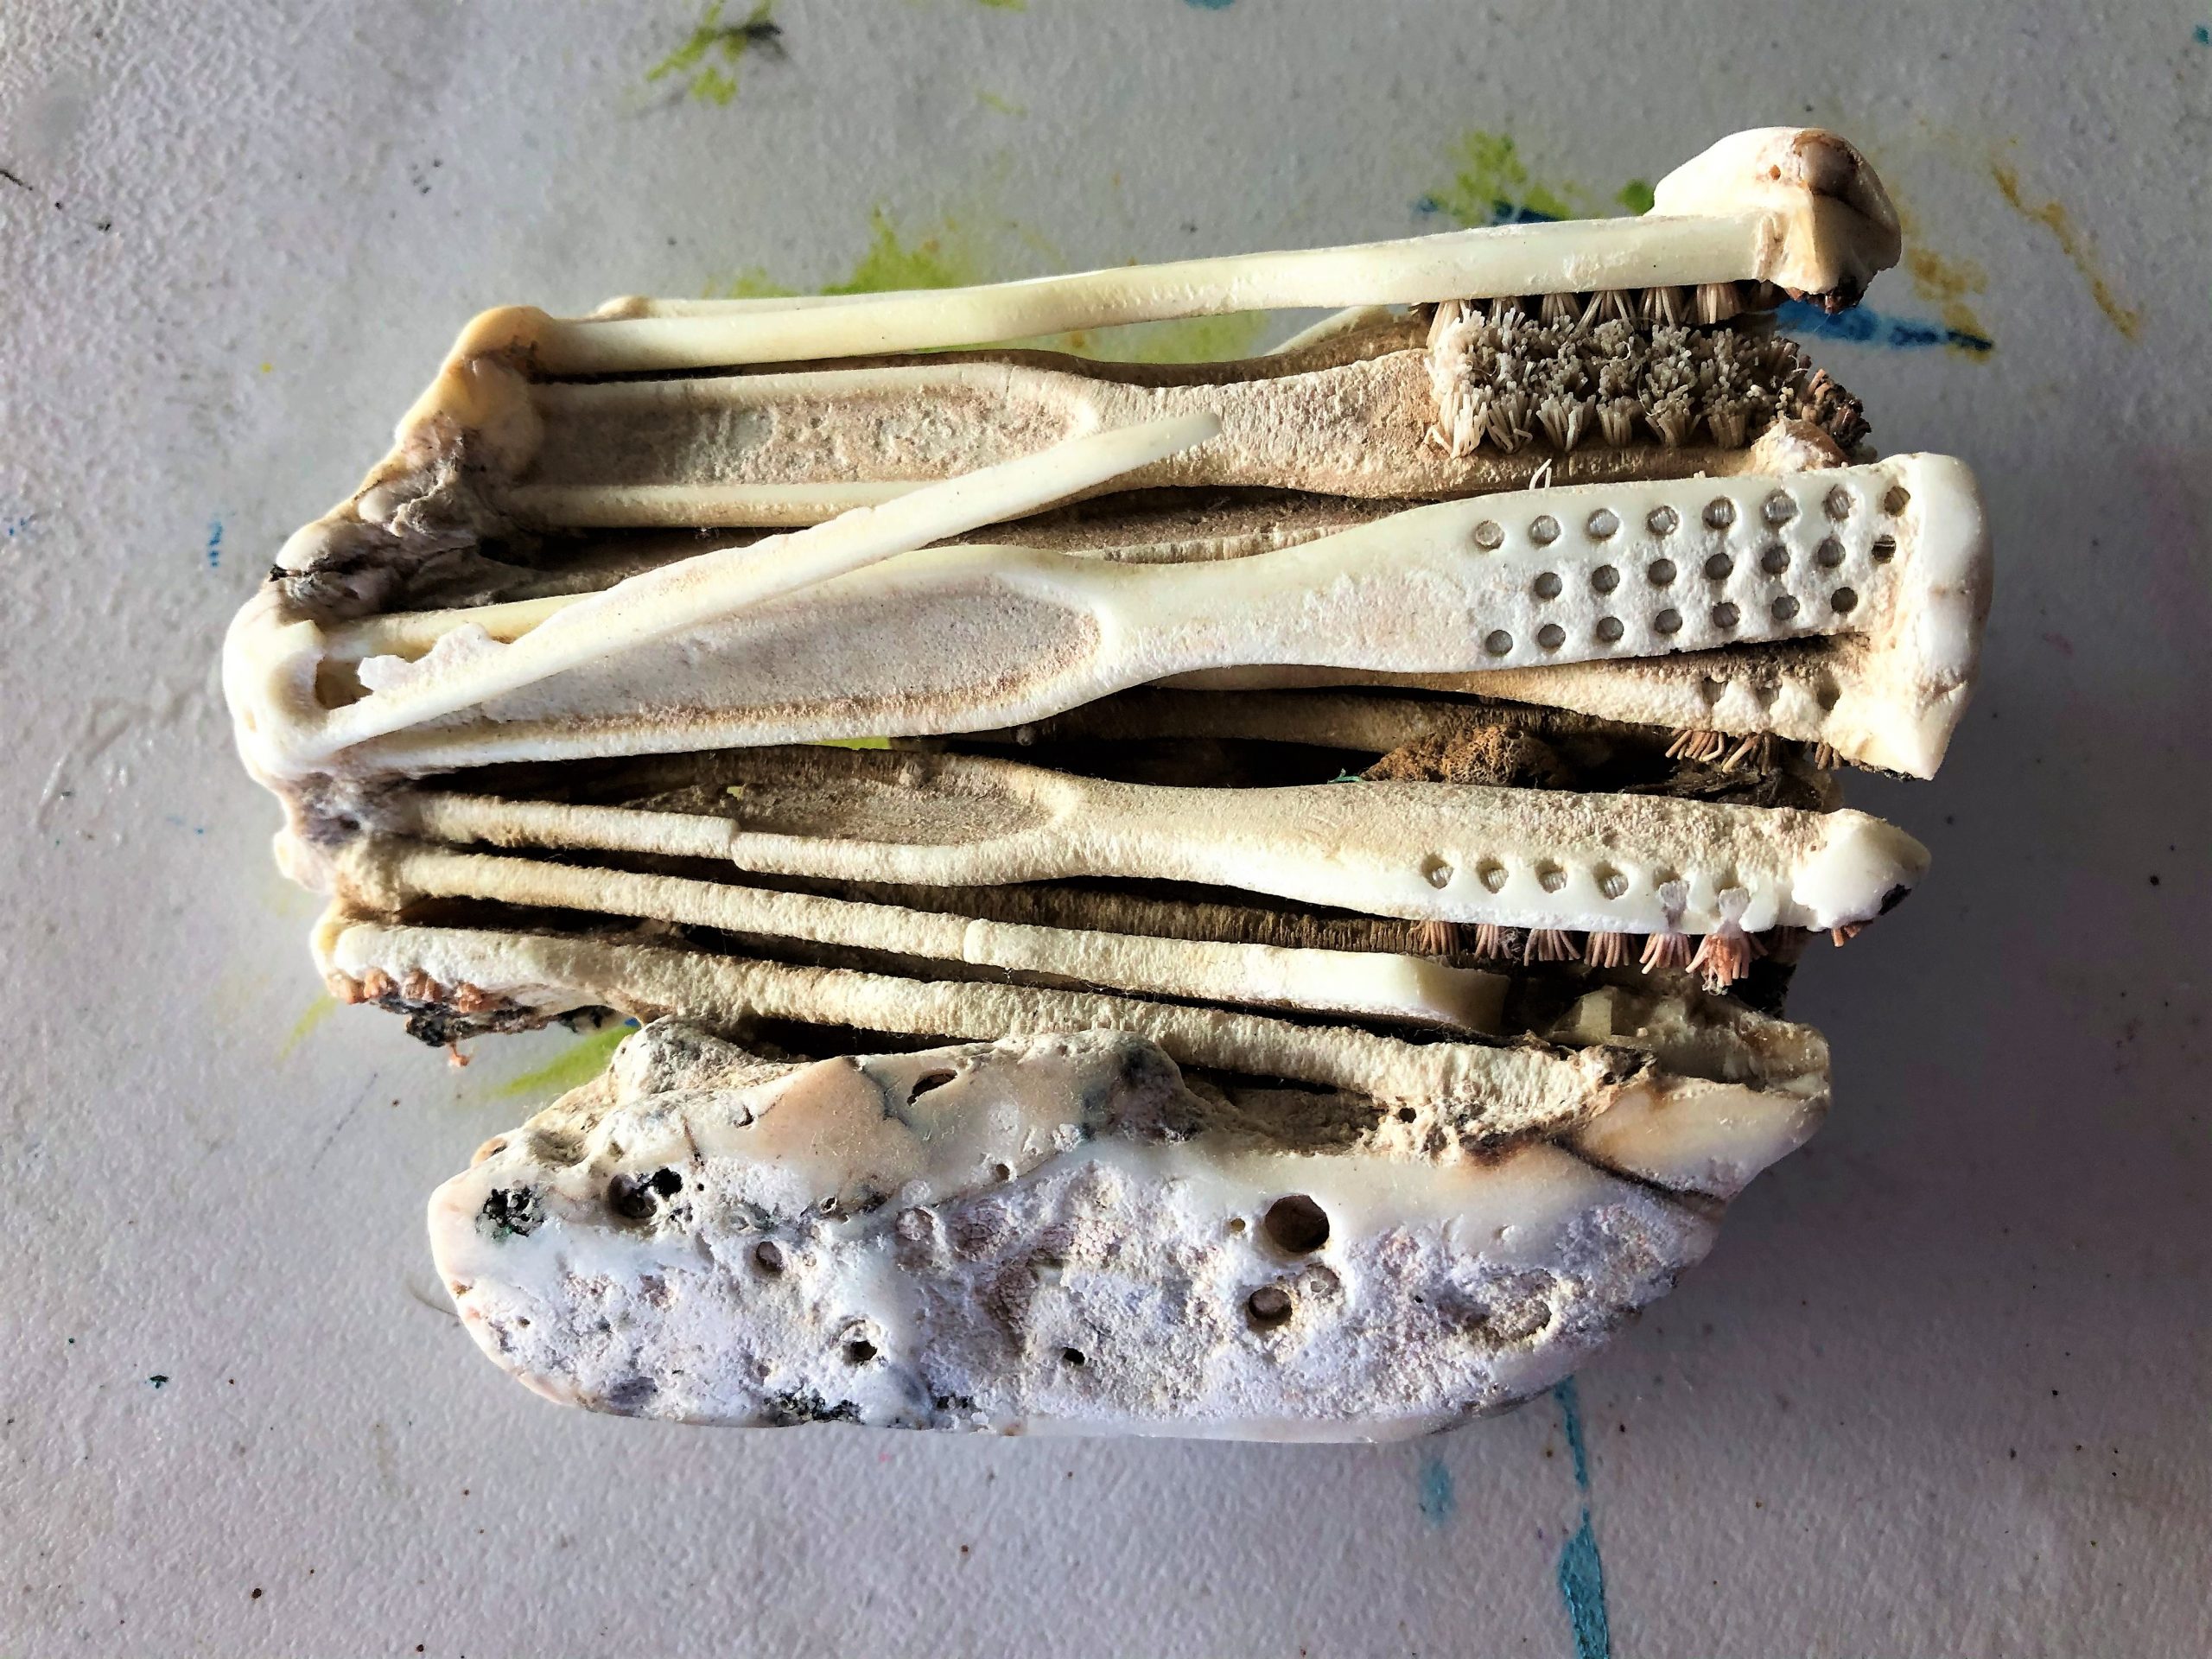 Marine debris, melted plastic toothbrushes.  